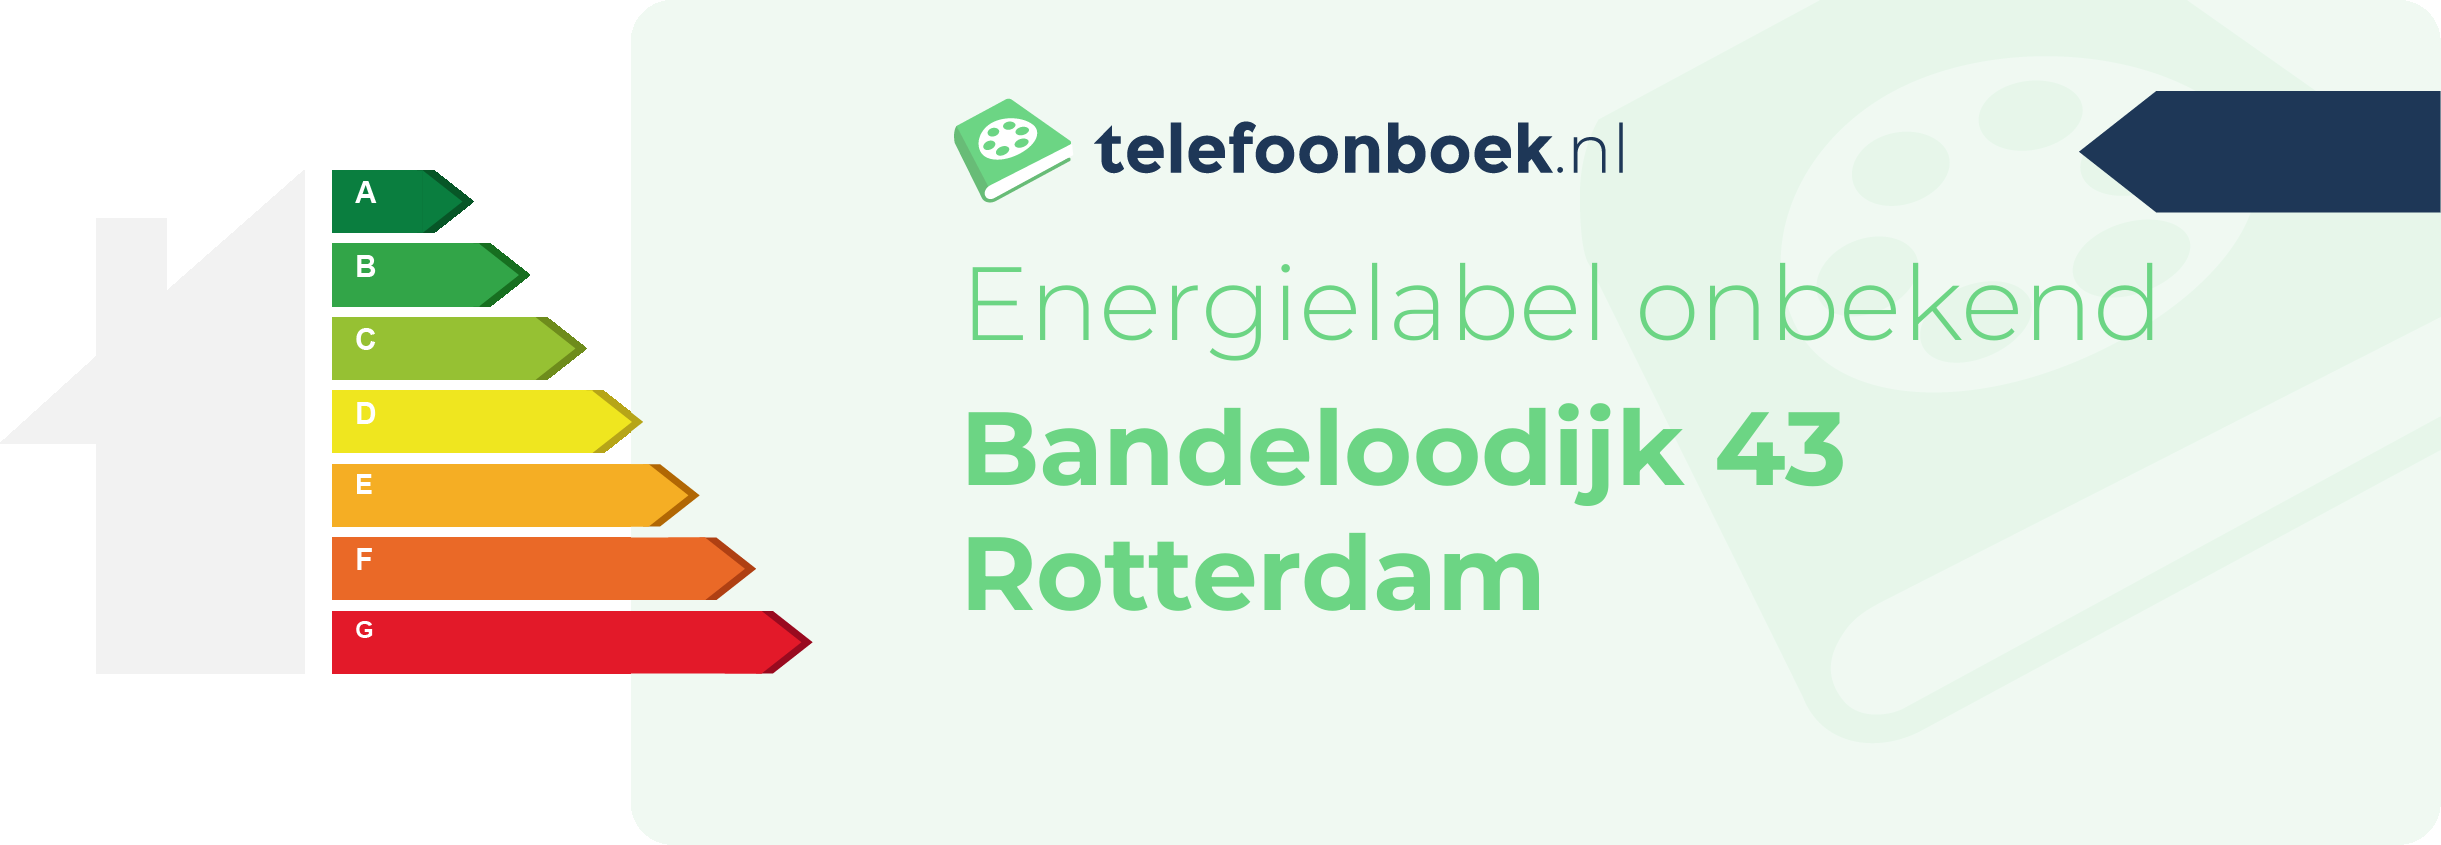 Energielabel Bandeloodijk 43 Rotterdam